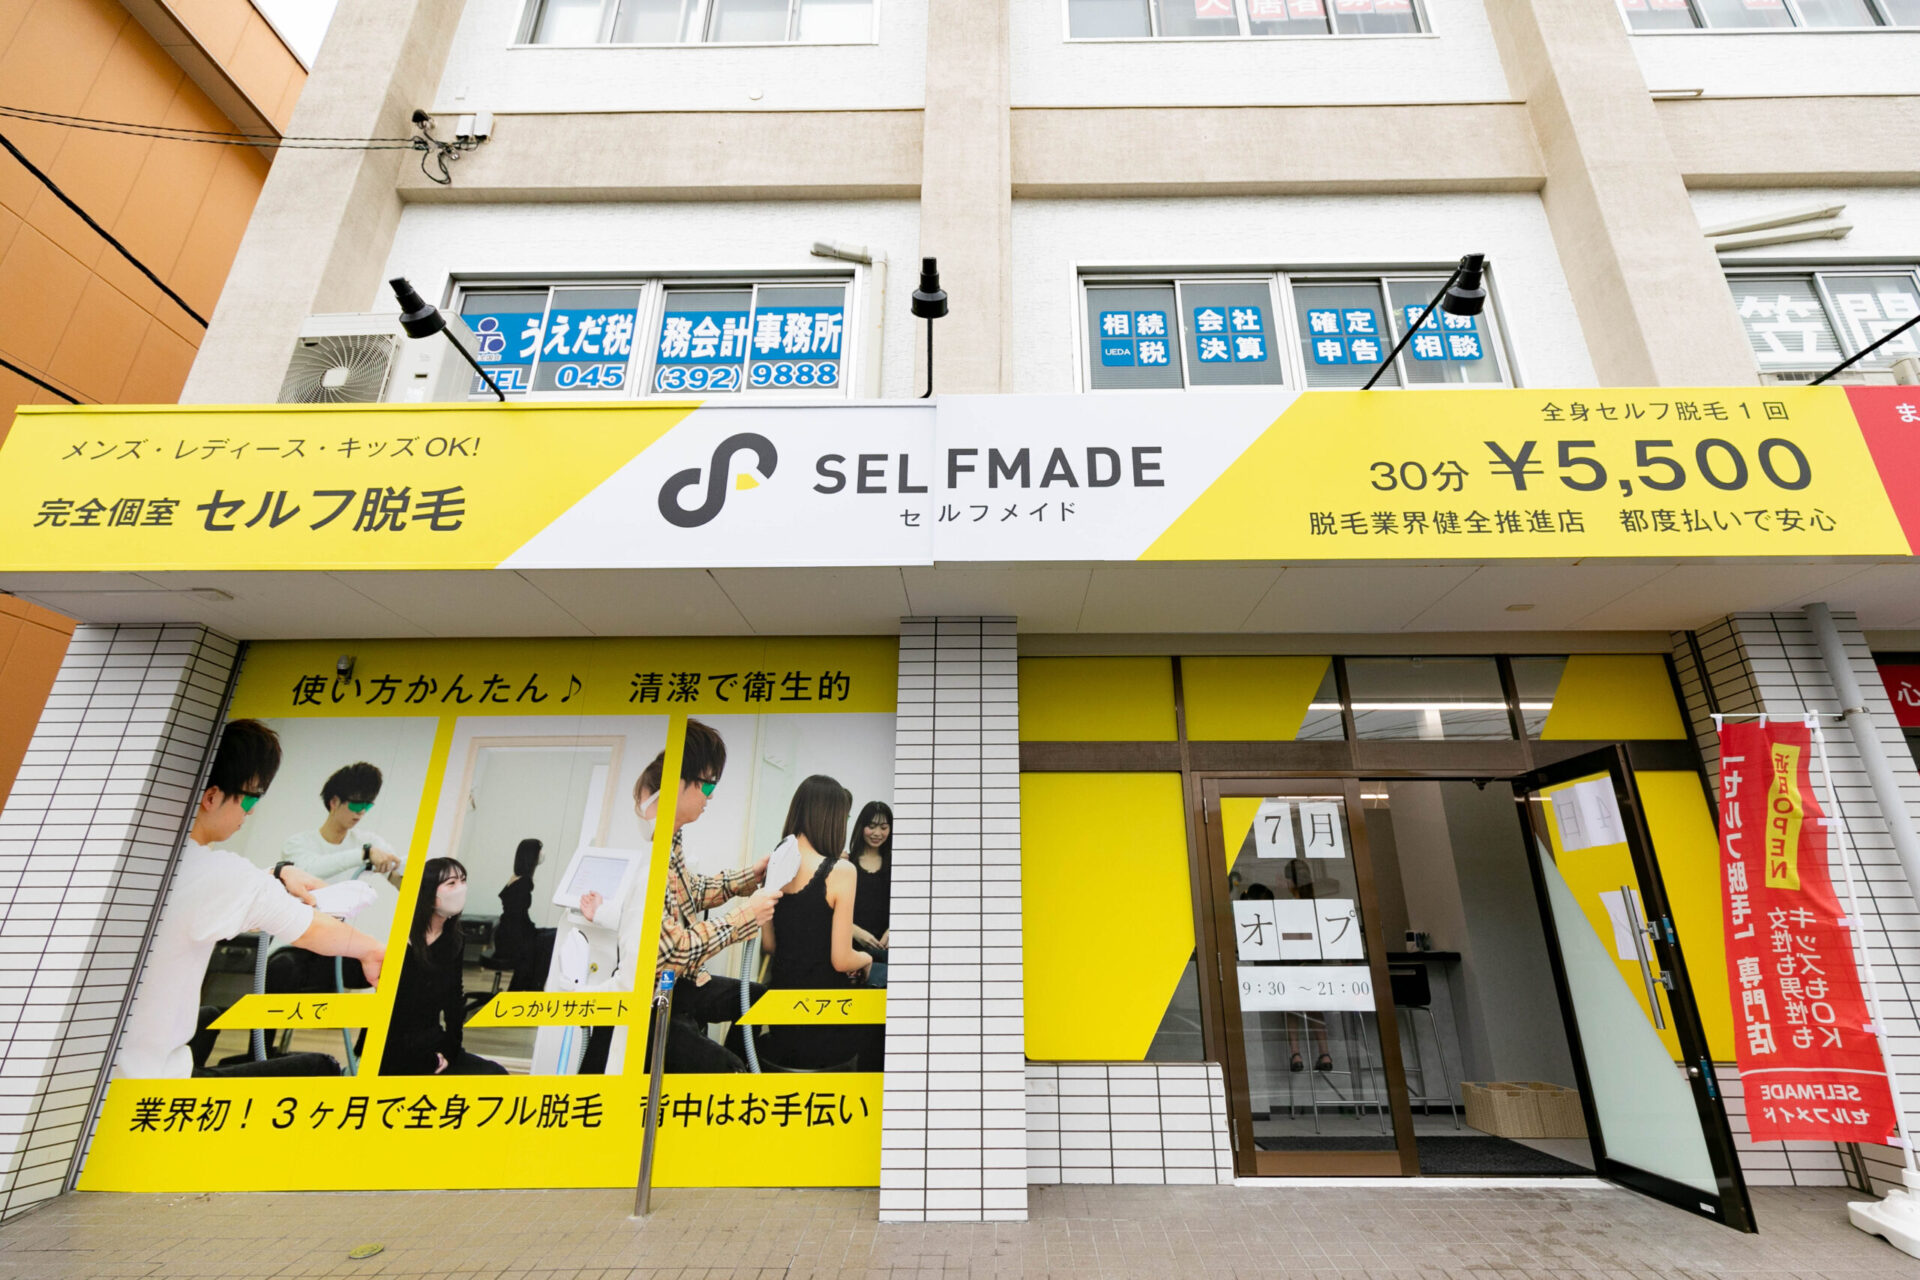 SELFMADE 大船笠間店